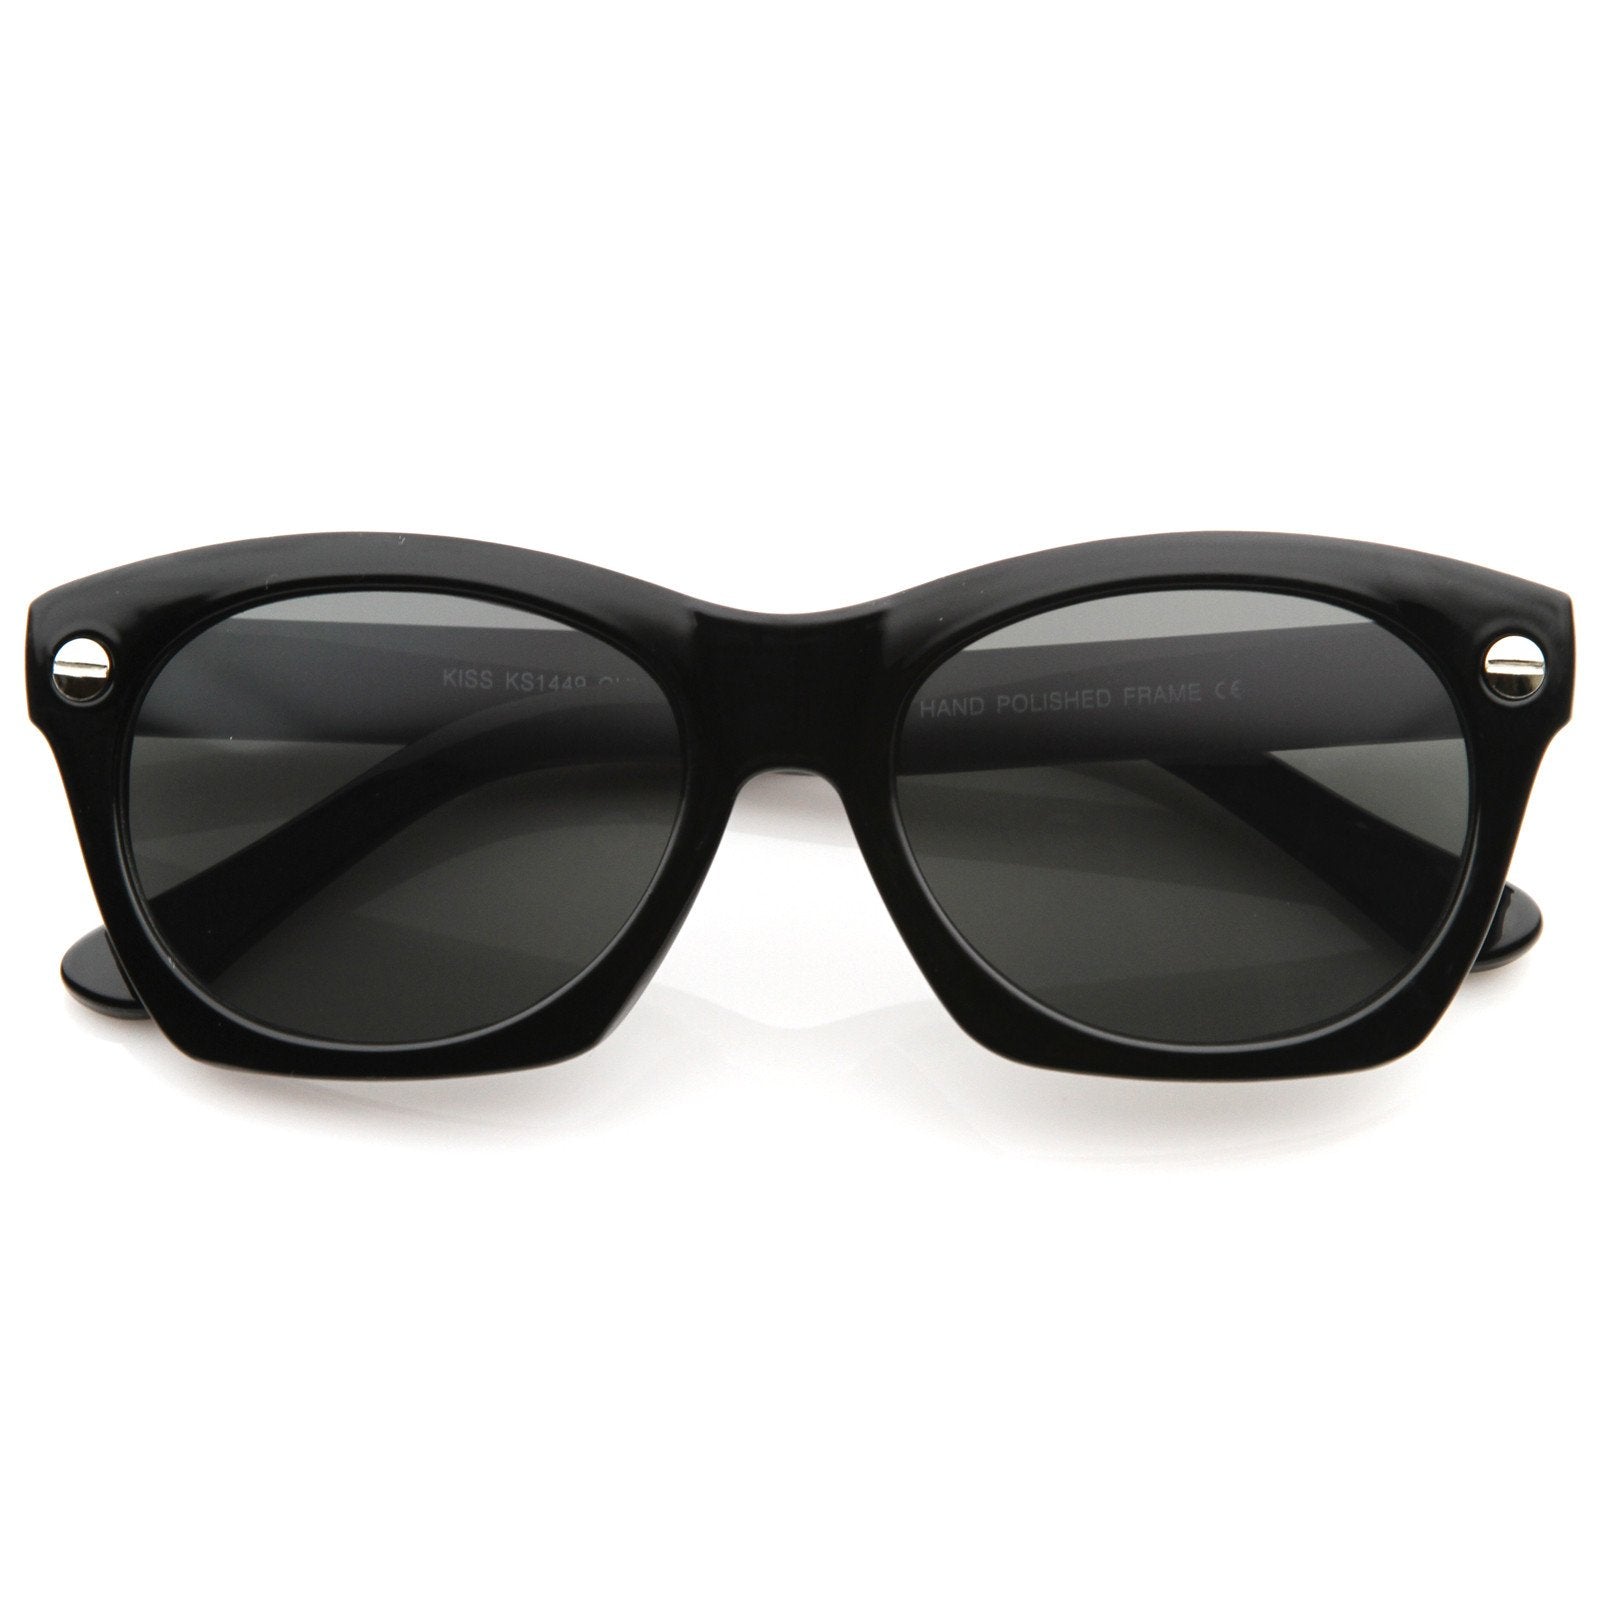 1pc Women's Oversized Square Sunglasses With Rhinestone Accents